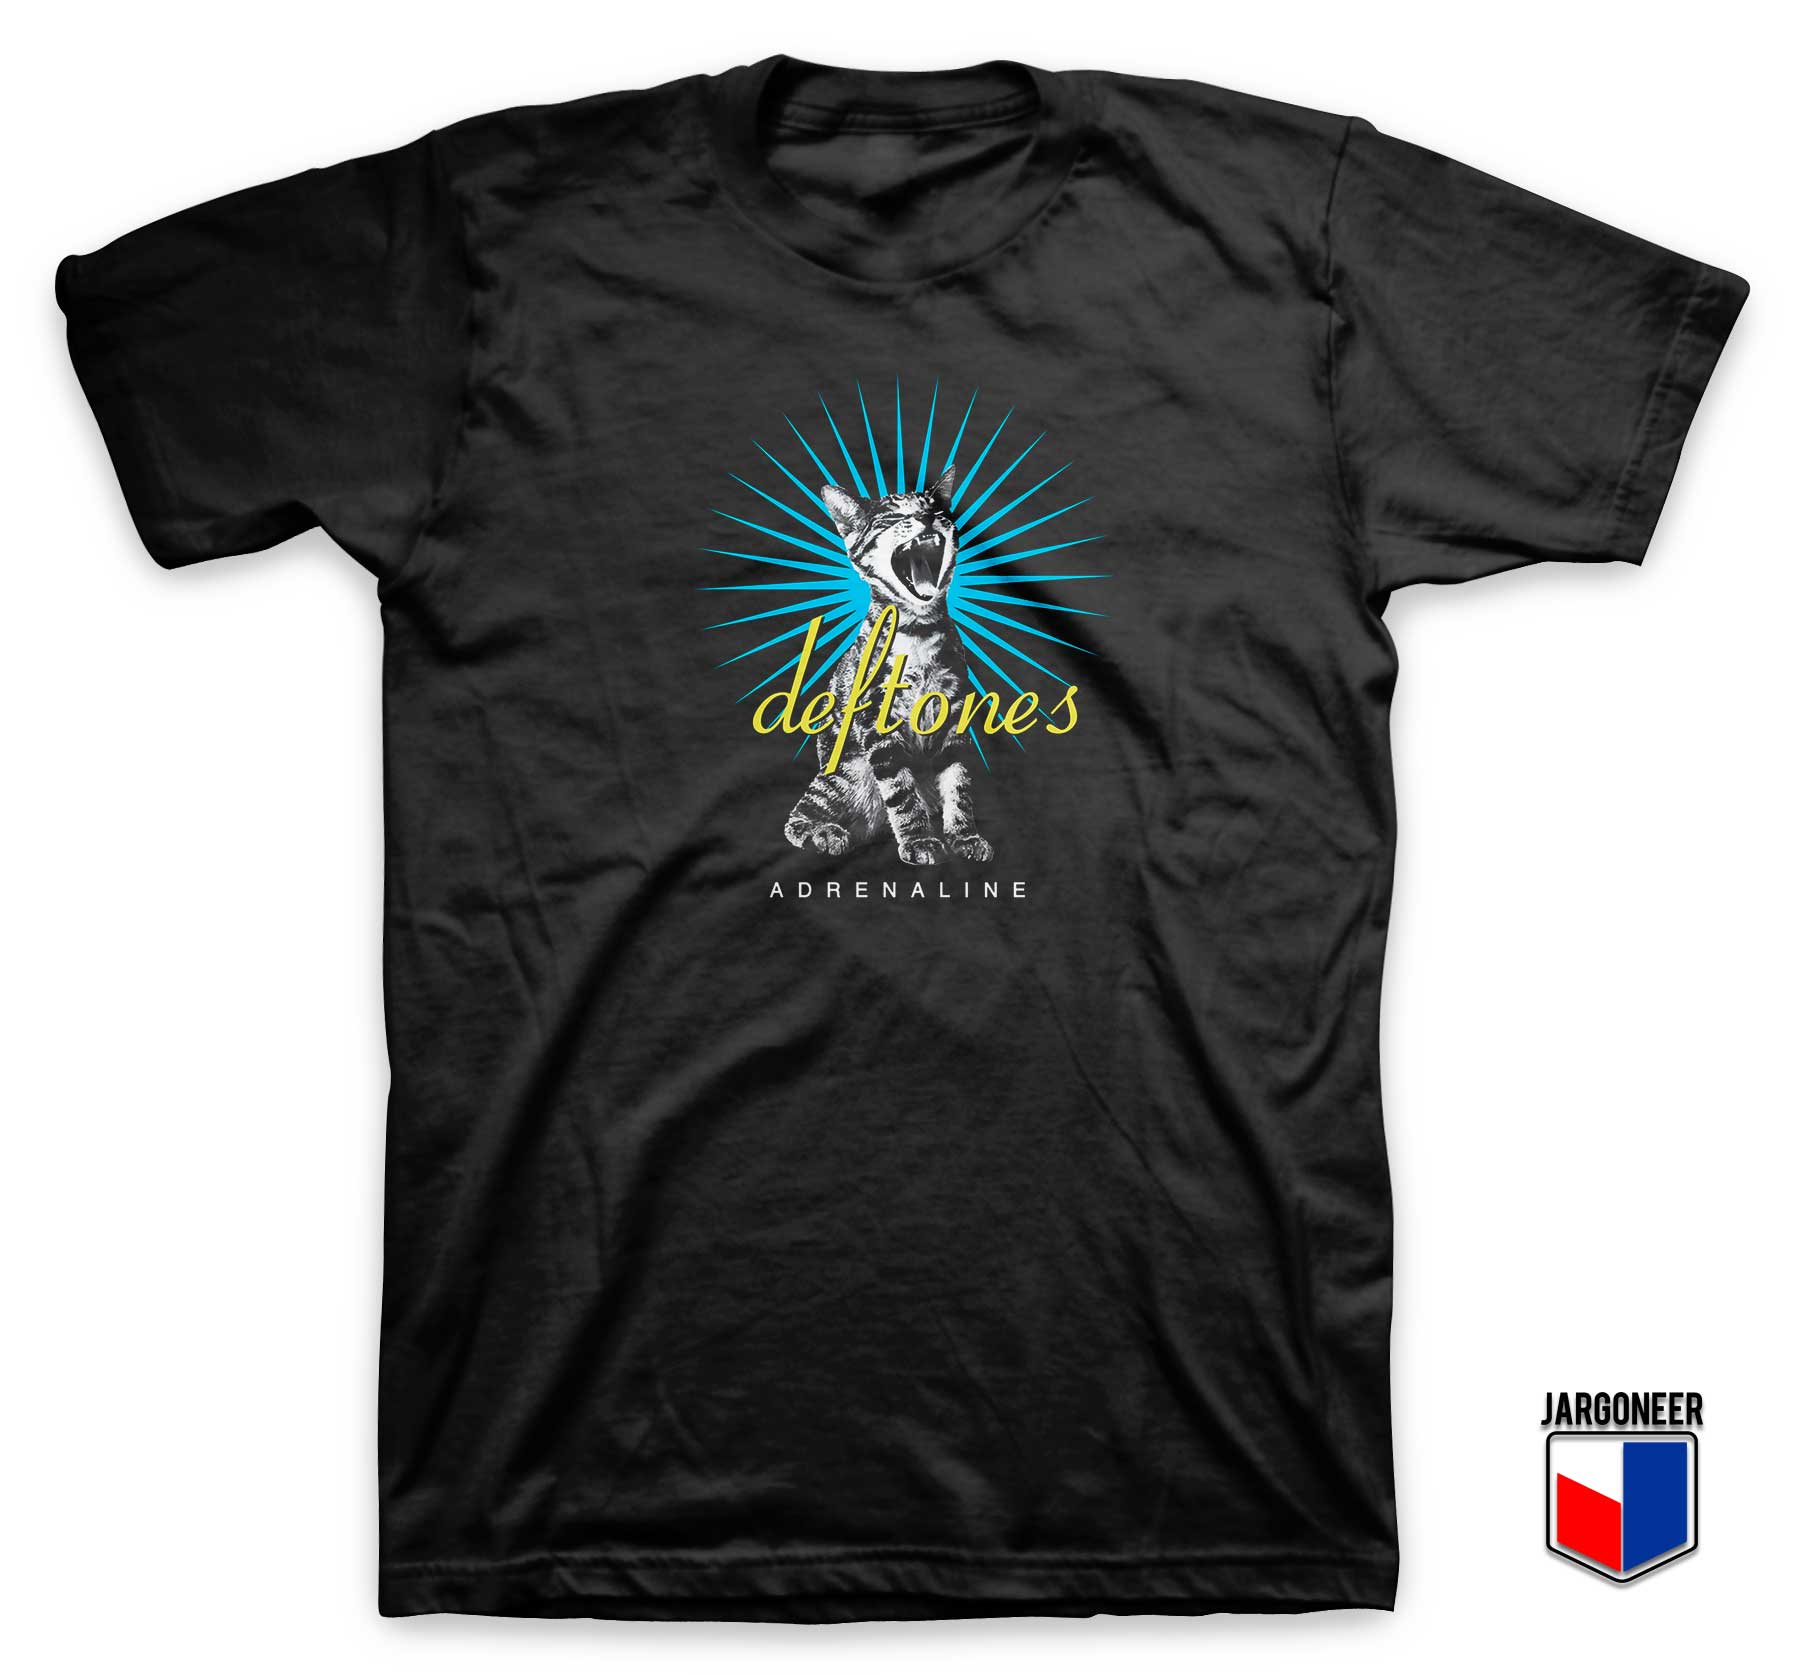 Deftones Adrenaline Screaming Cat T shirt - Shop Unique Graphic Cool Shirt Designs